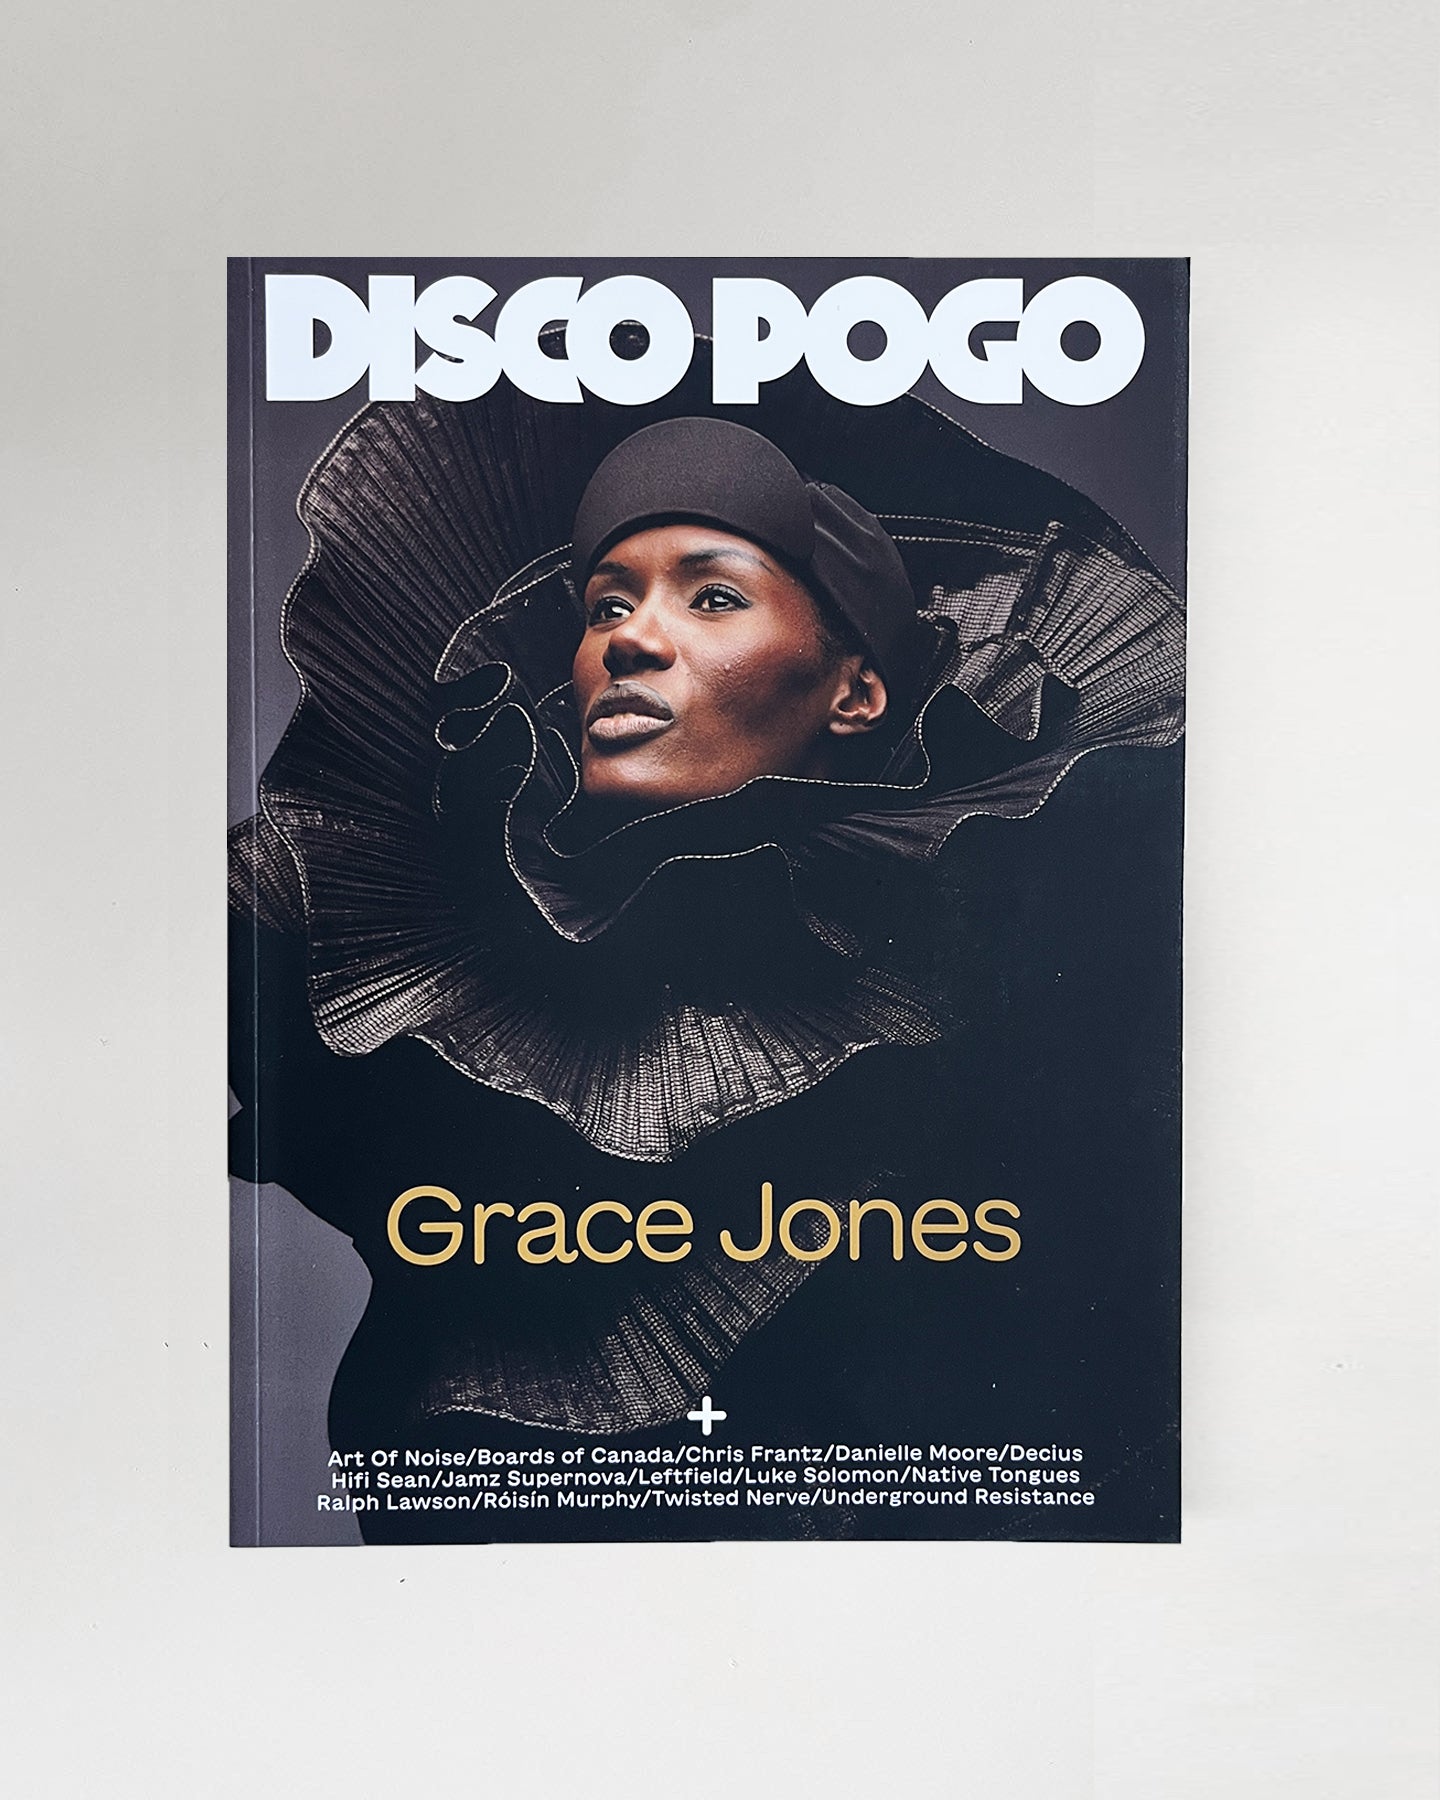 Disco Pogo Grace Jones Cover